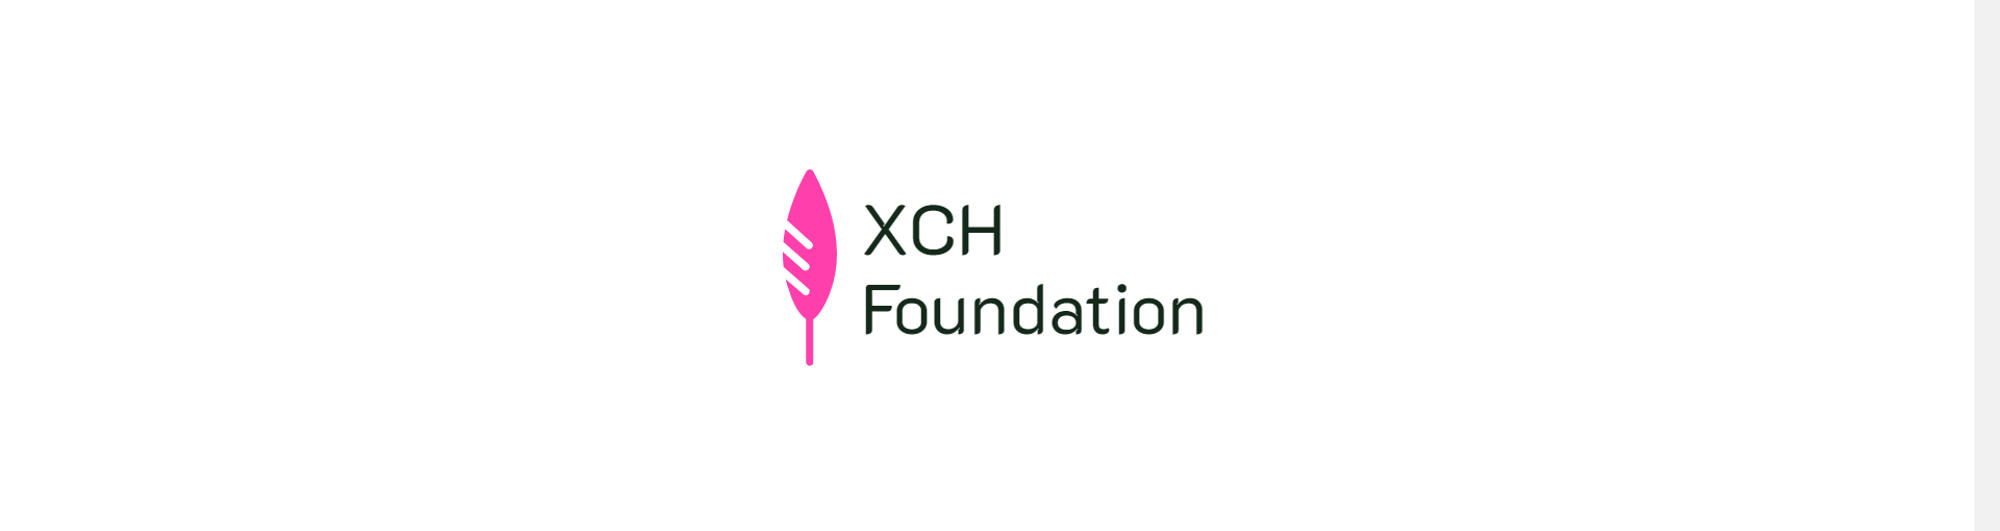 The XCH Foundation logo